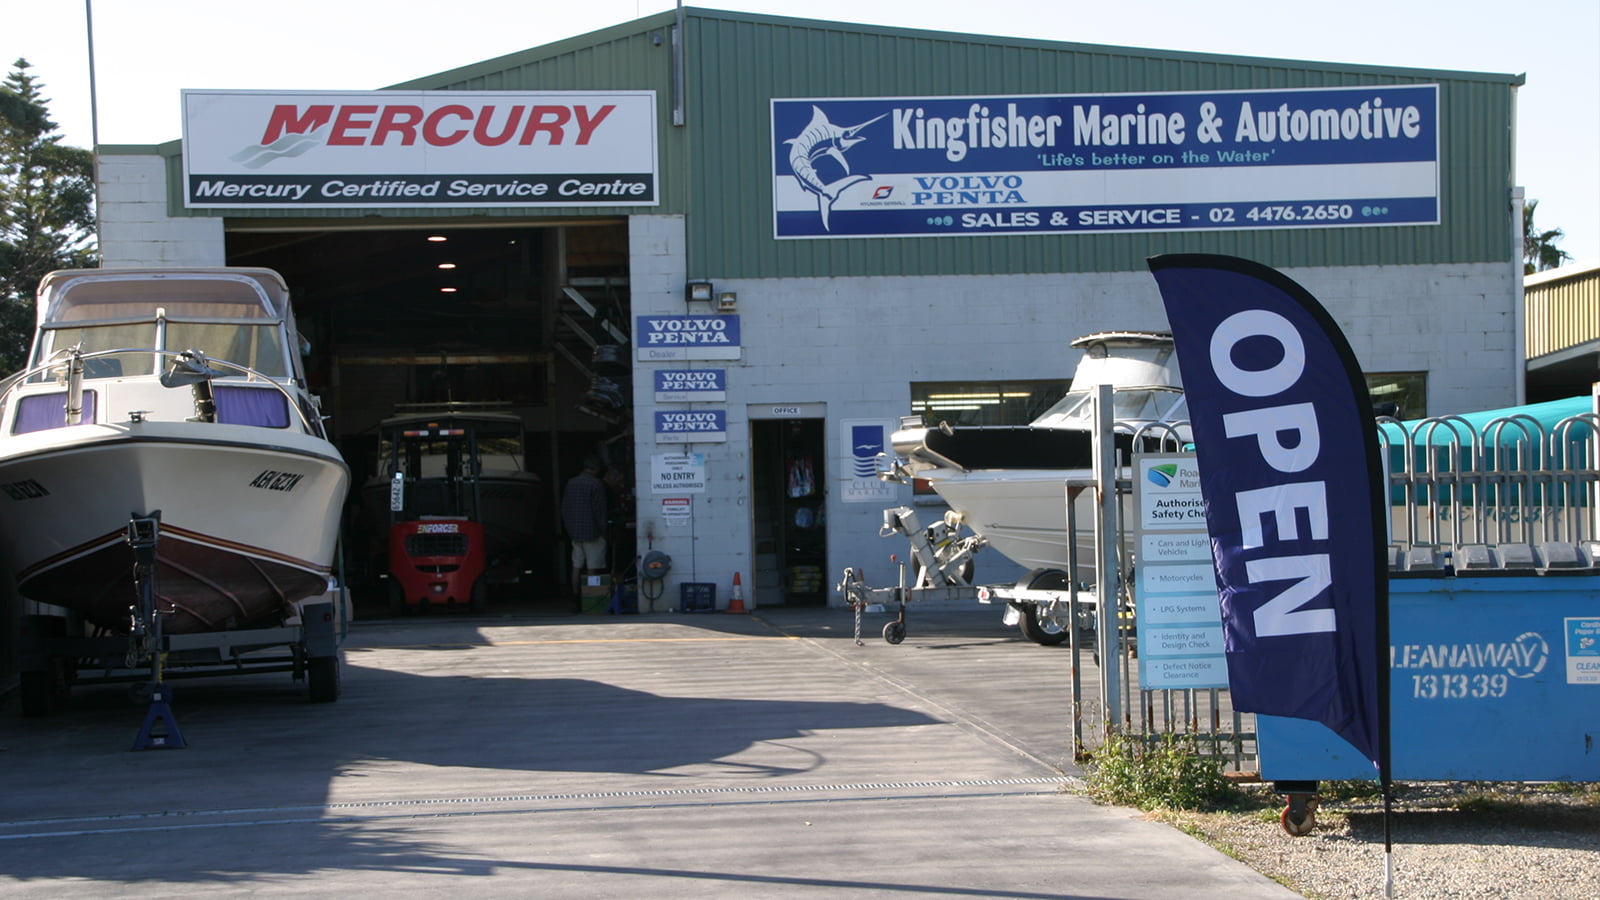 Kingfisher Marine & Automotive